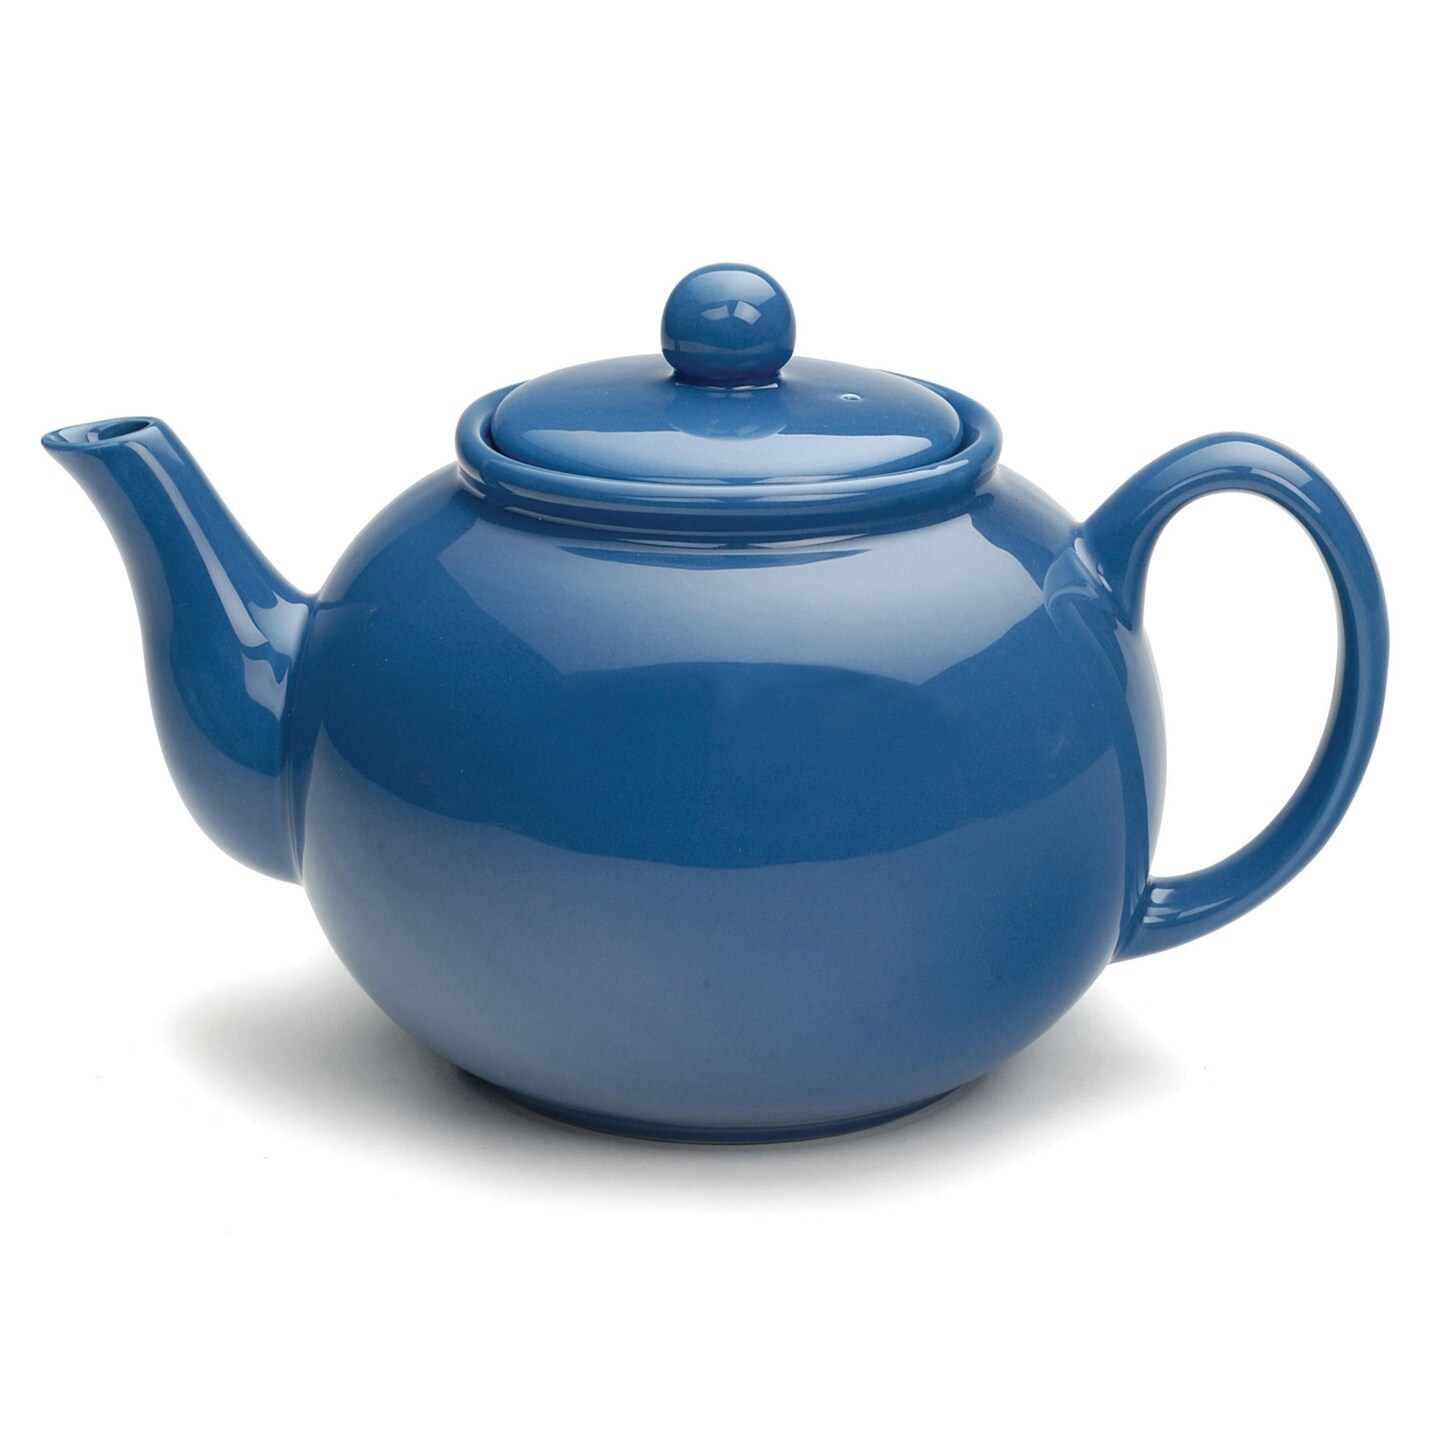 RSVP International Stoneware Teapot, Light Blue